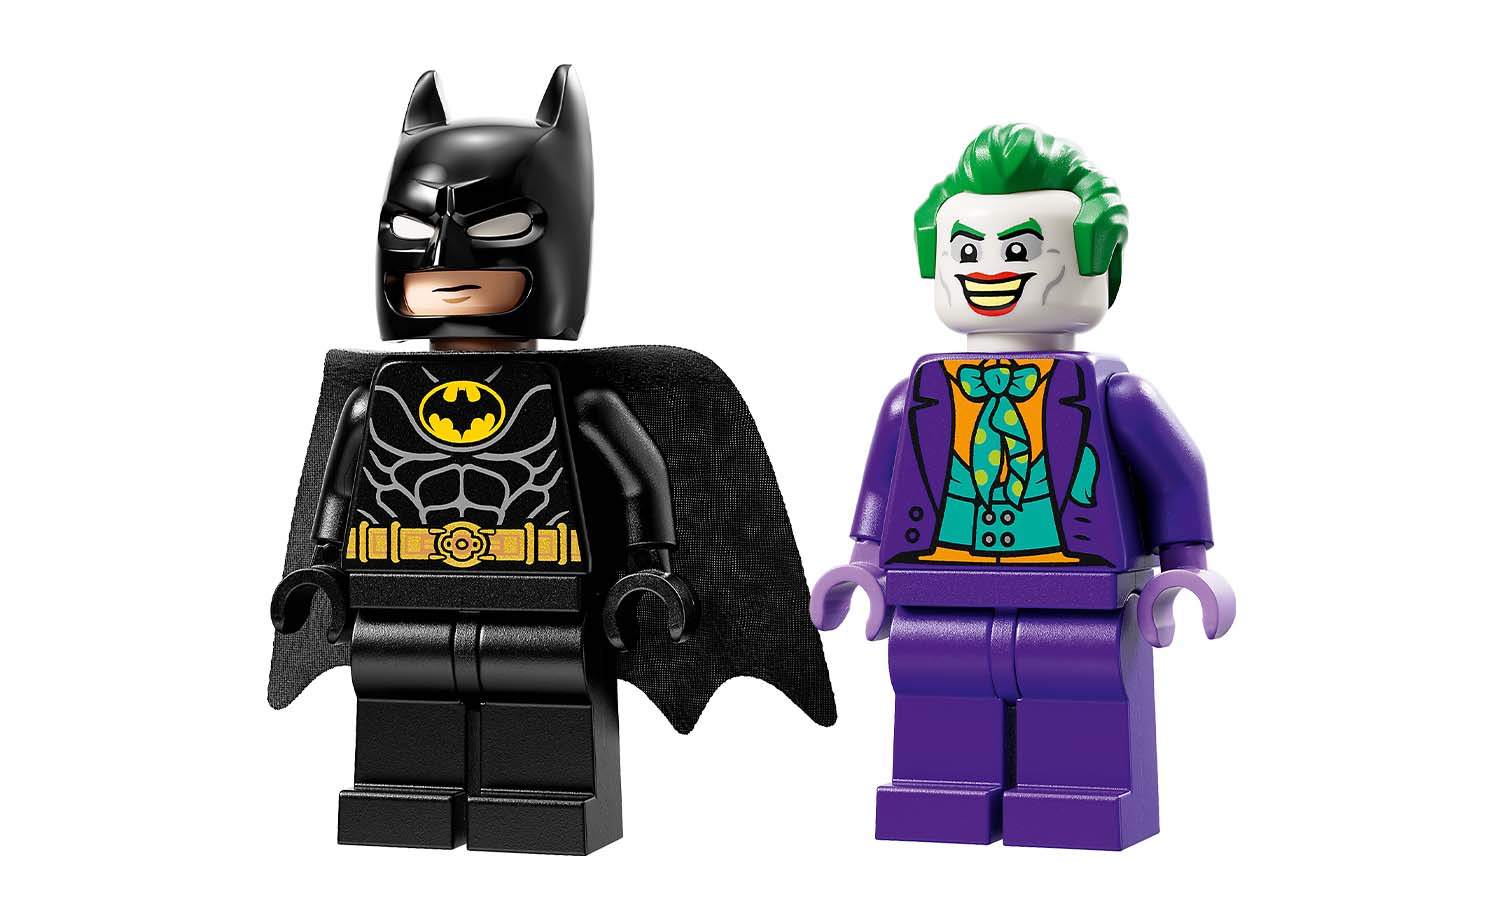 LEGO DC Batmobile: Batman vs. The Joker Chase Super Hero Toy 76224